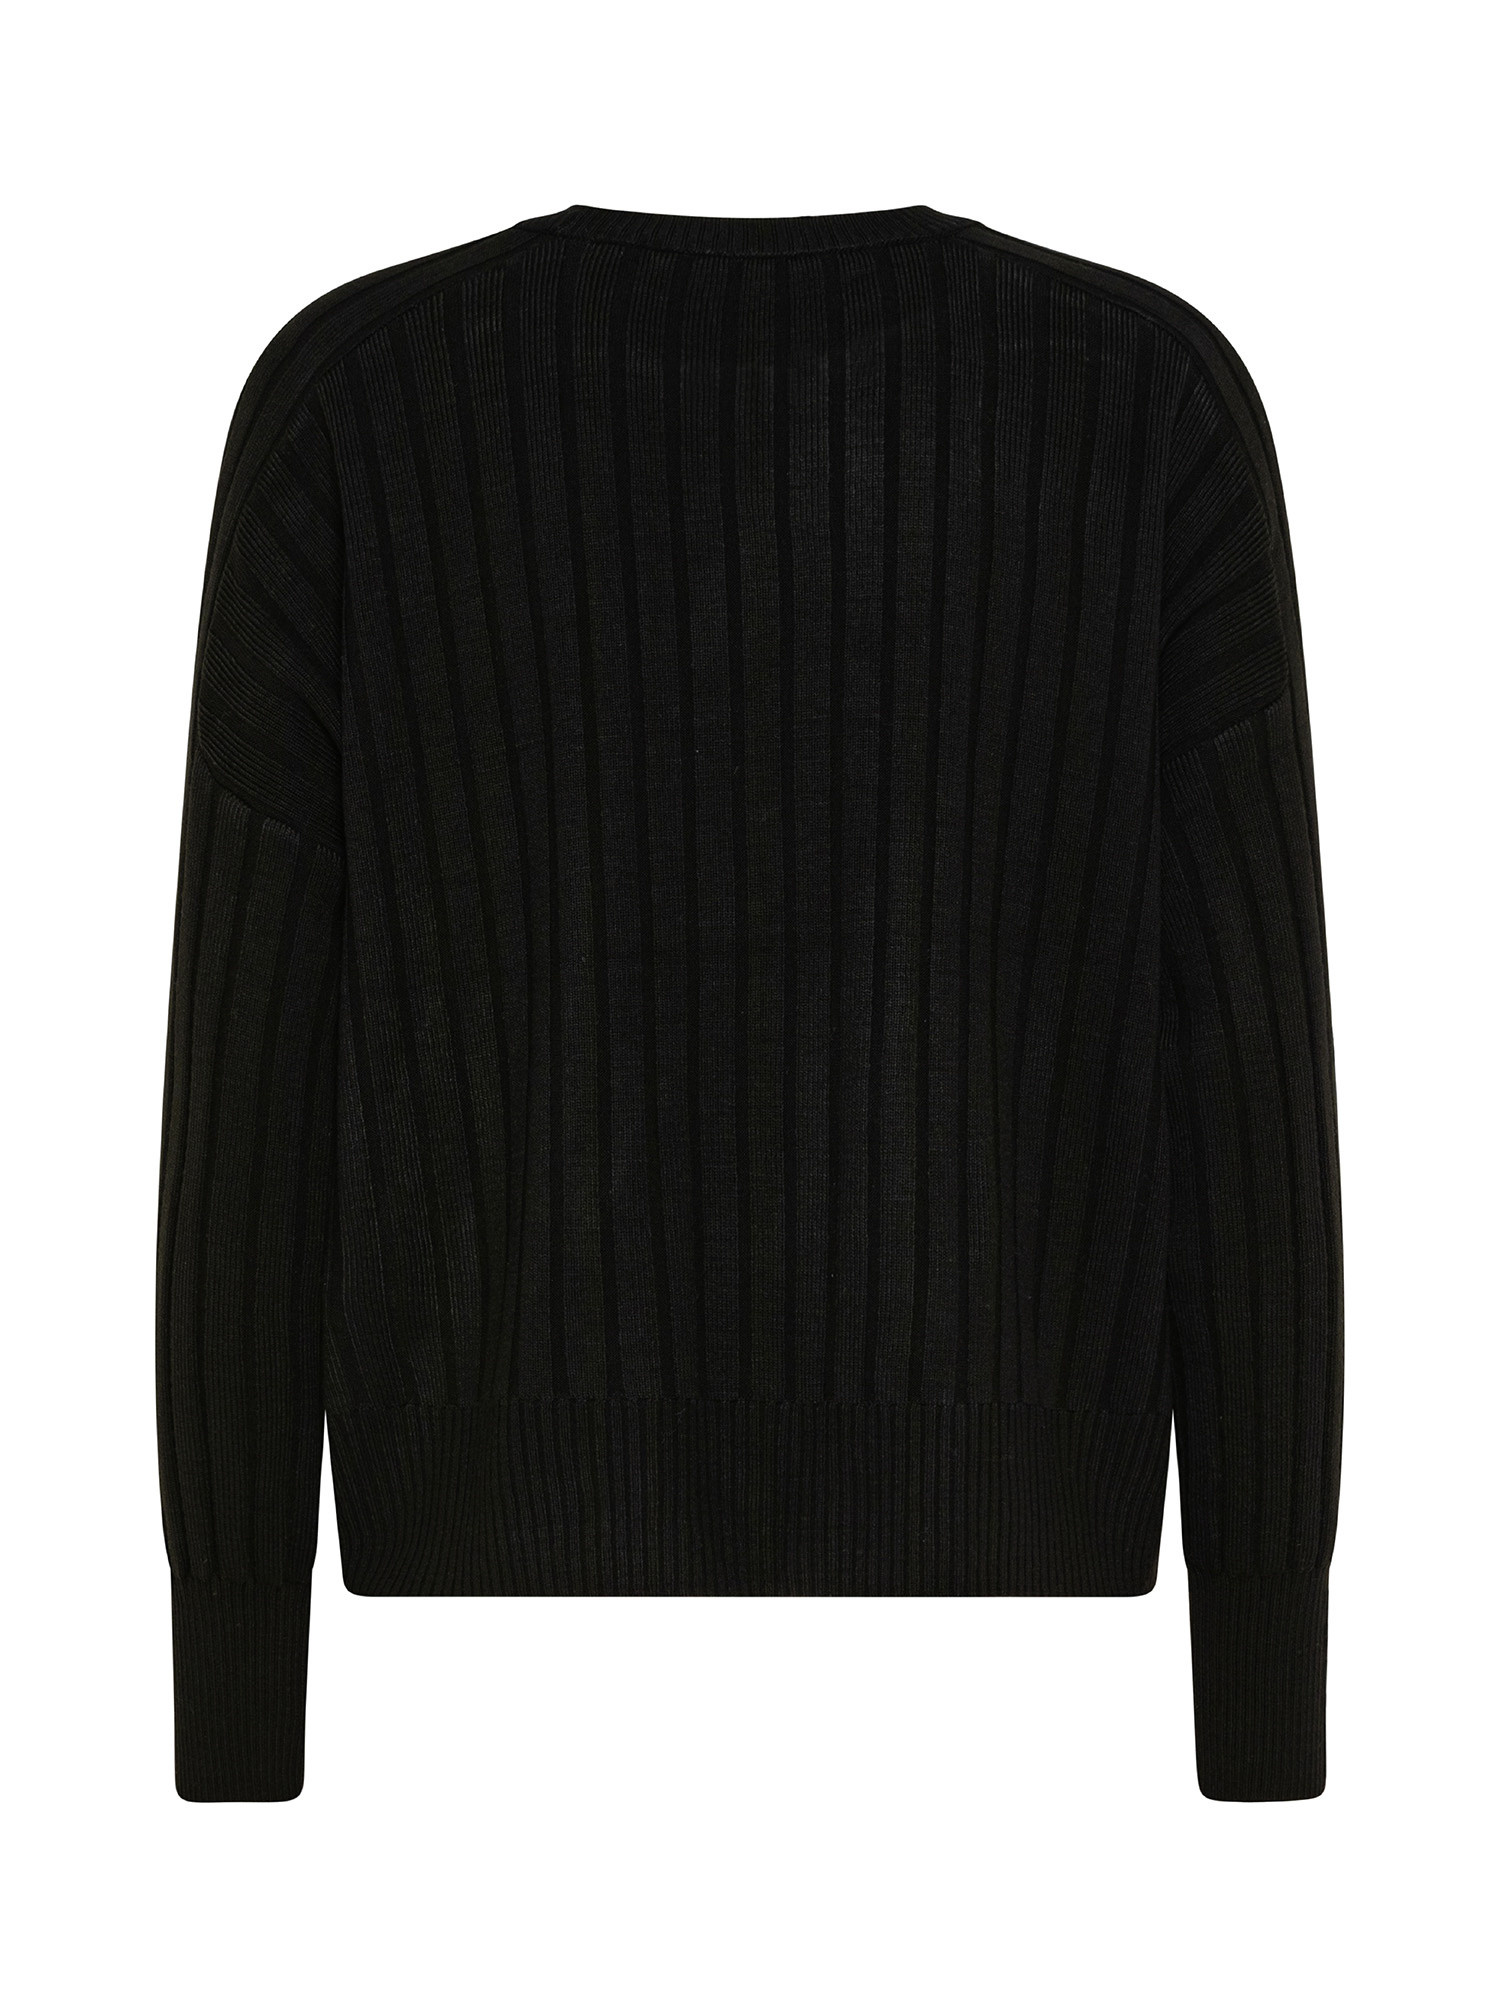 ribbed pullover, Black, large image number 1